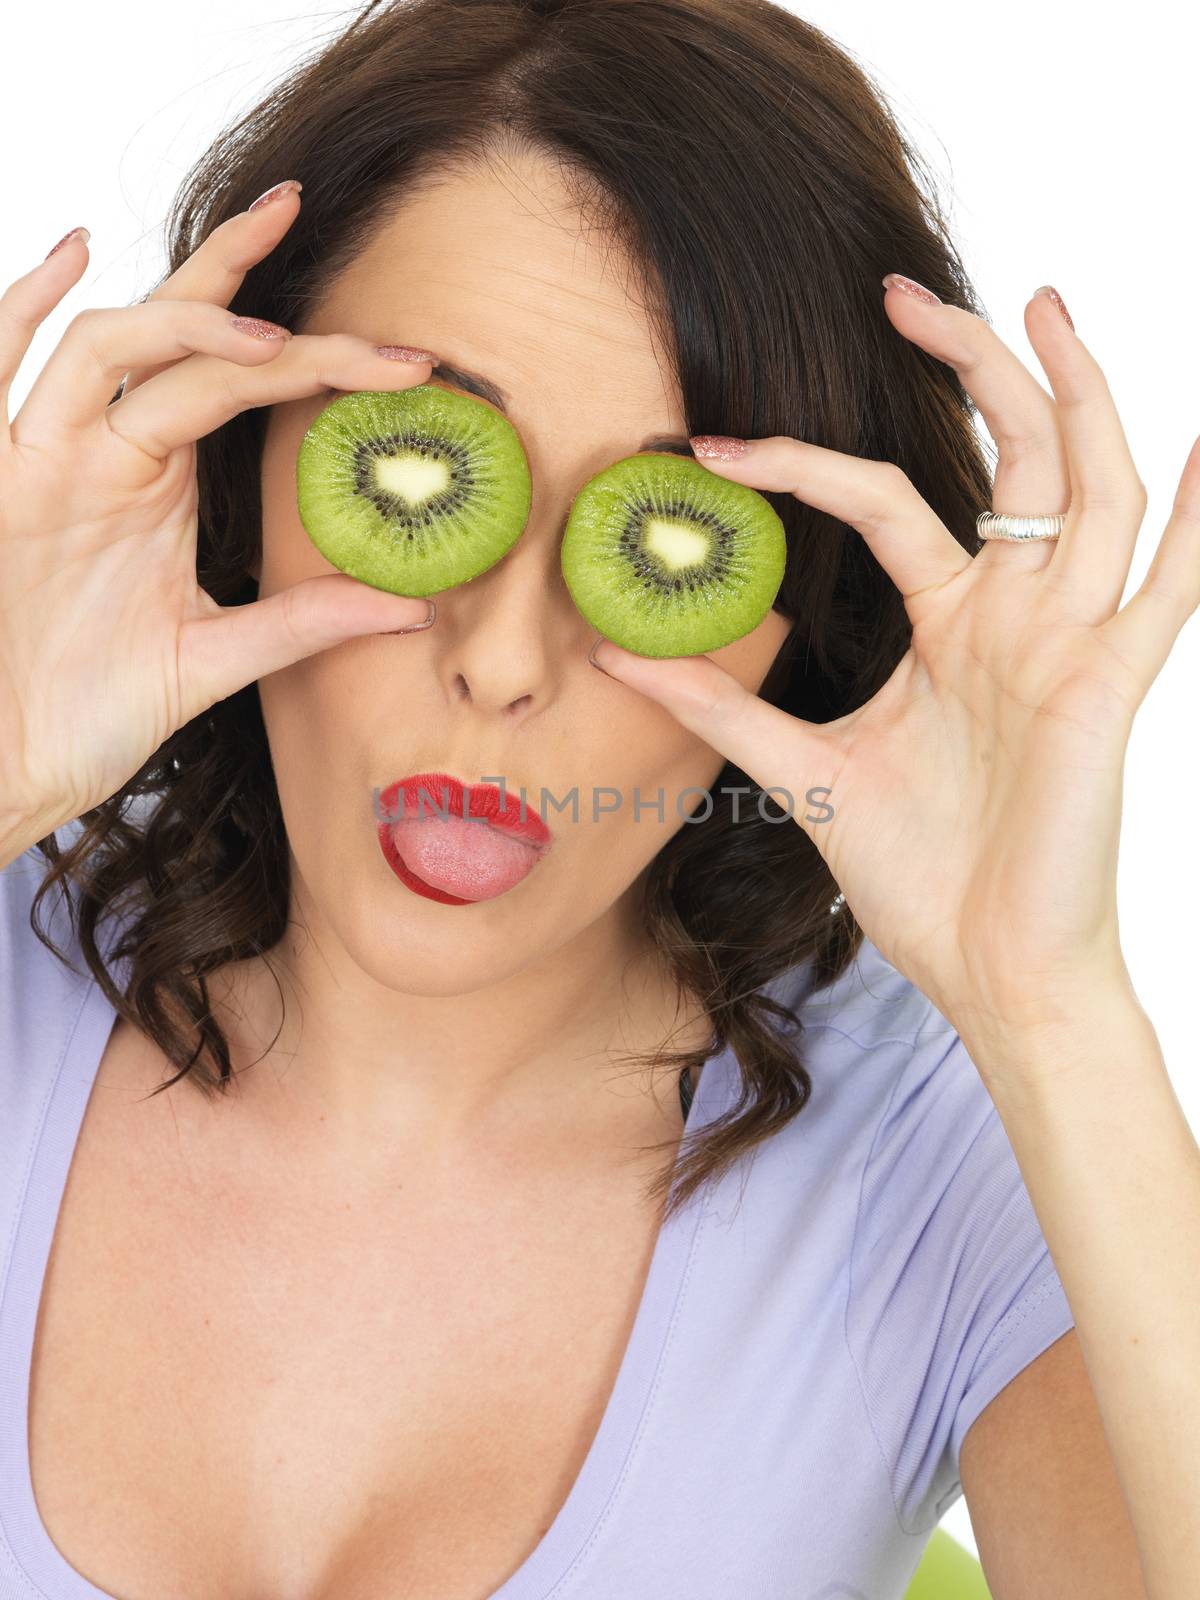 Young Woman Holding Fresh Ripe Kiwi Fruit by Whiteboxmedia